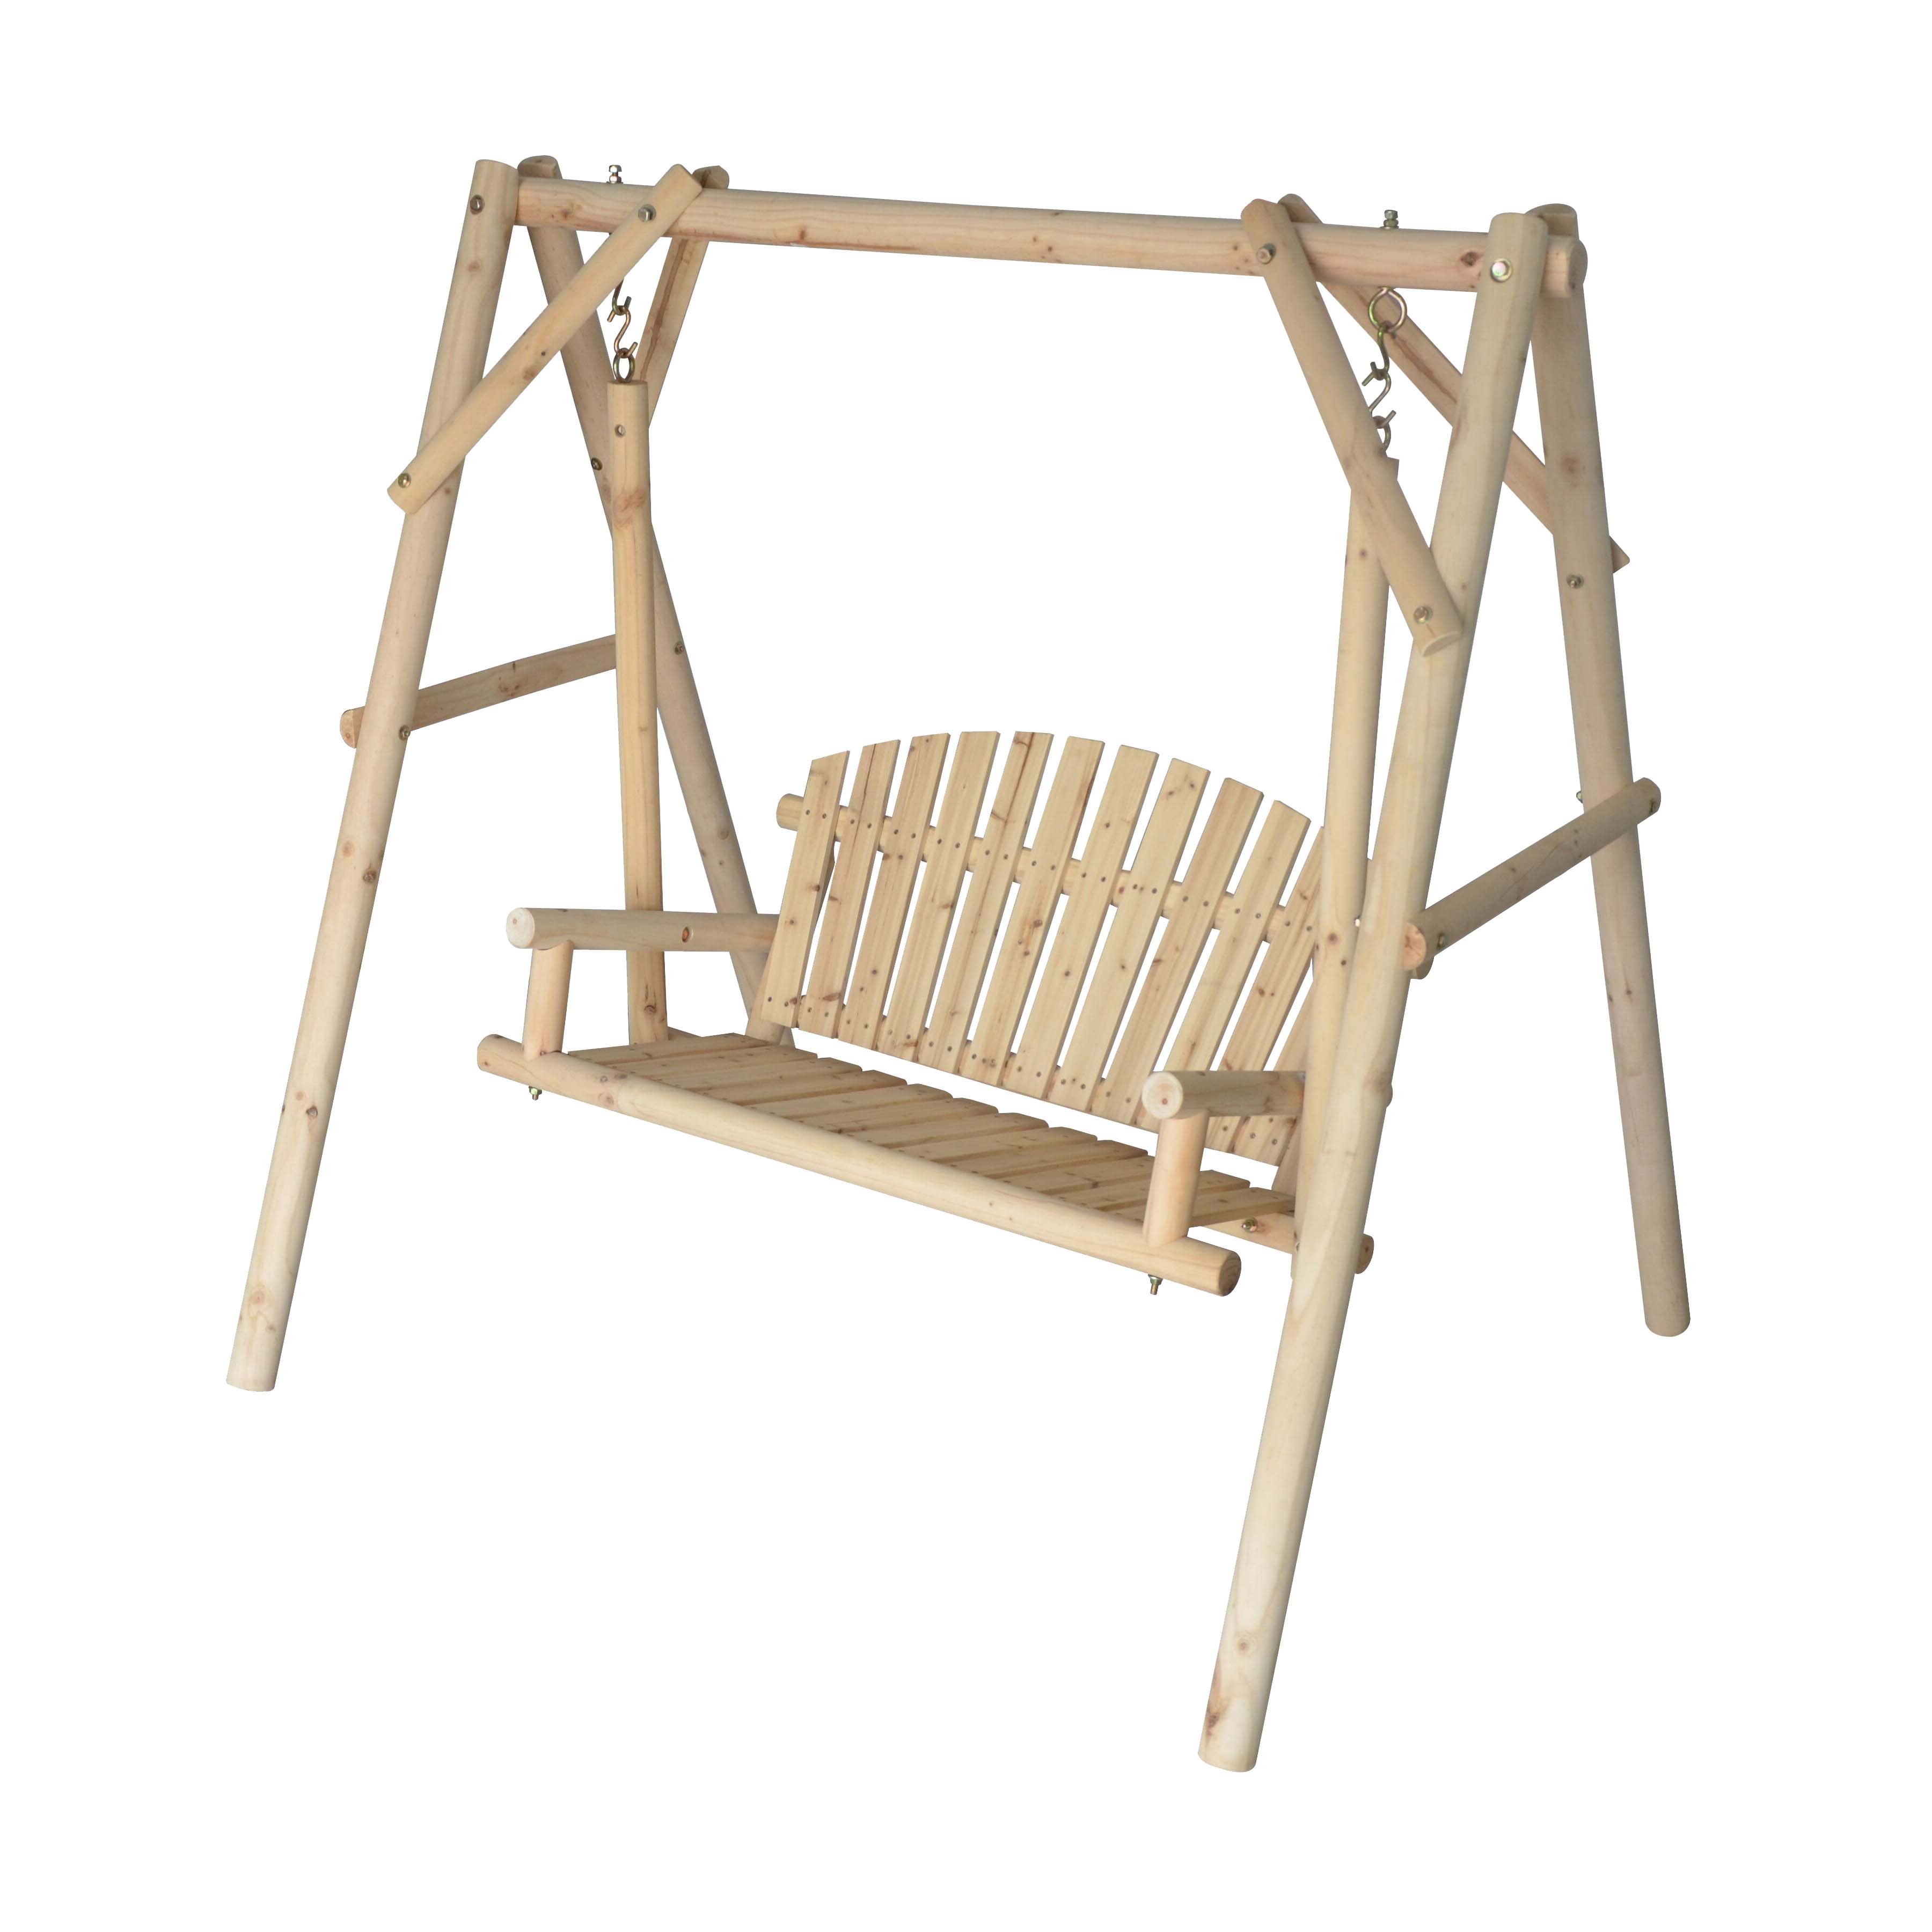 F12022 Log Swing and Frame Kit, 450 lbs Seating, Cedar Wood Frame, Nature Frame